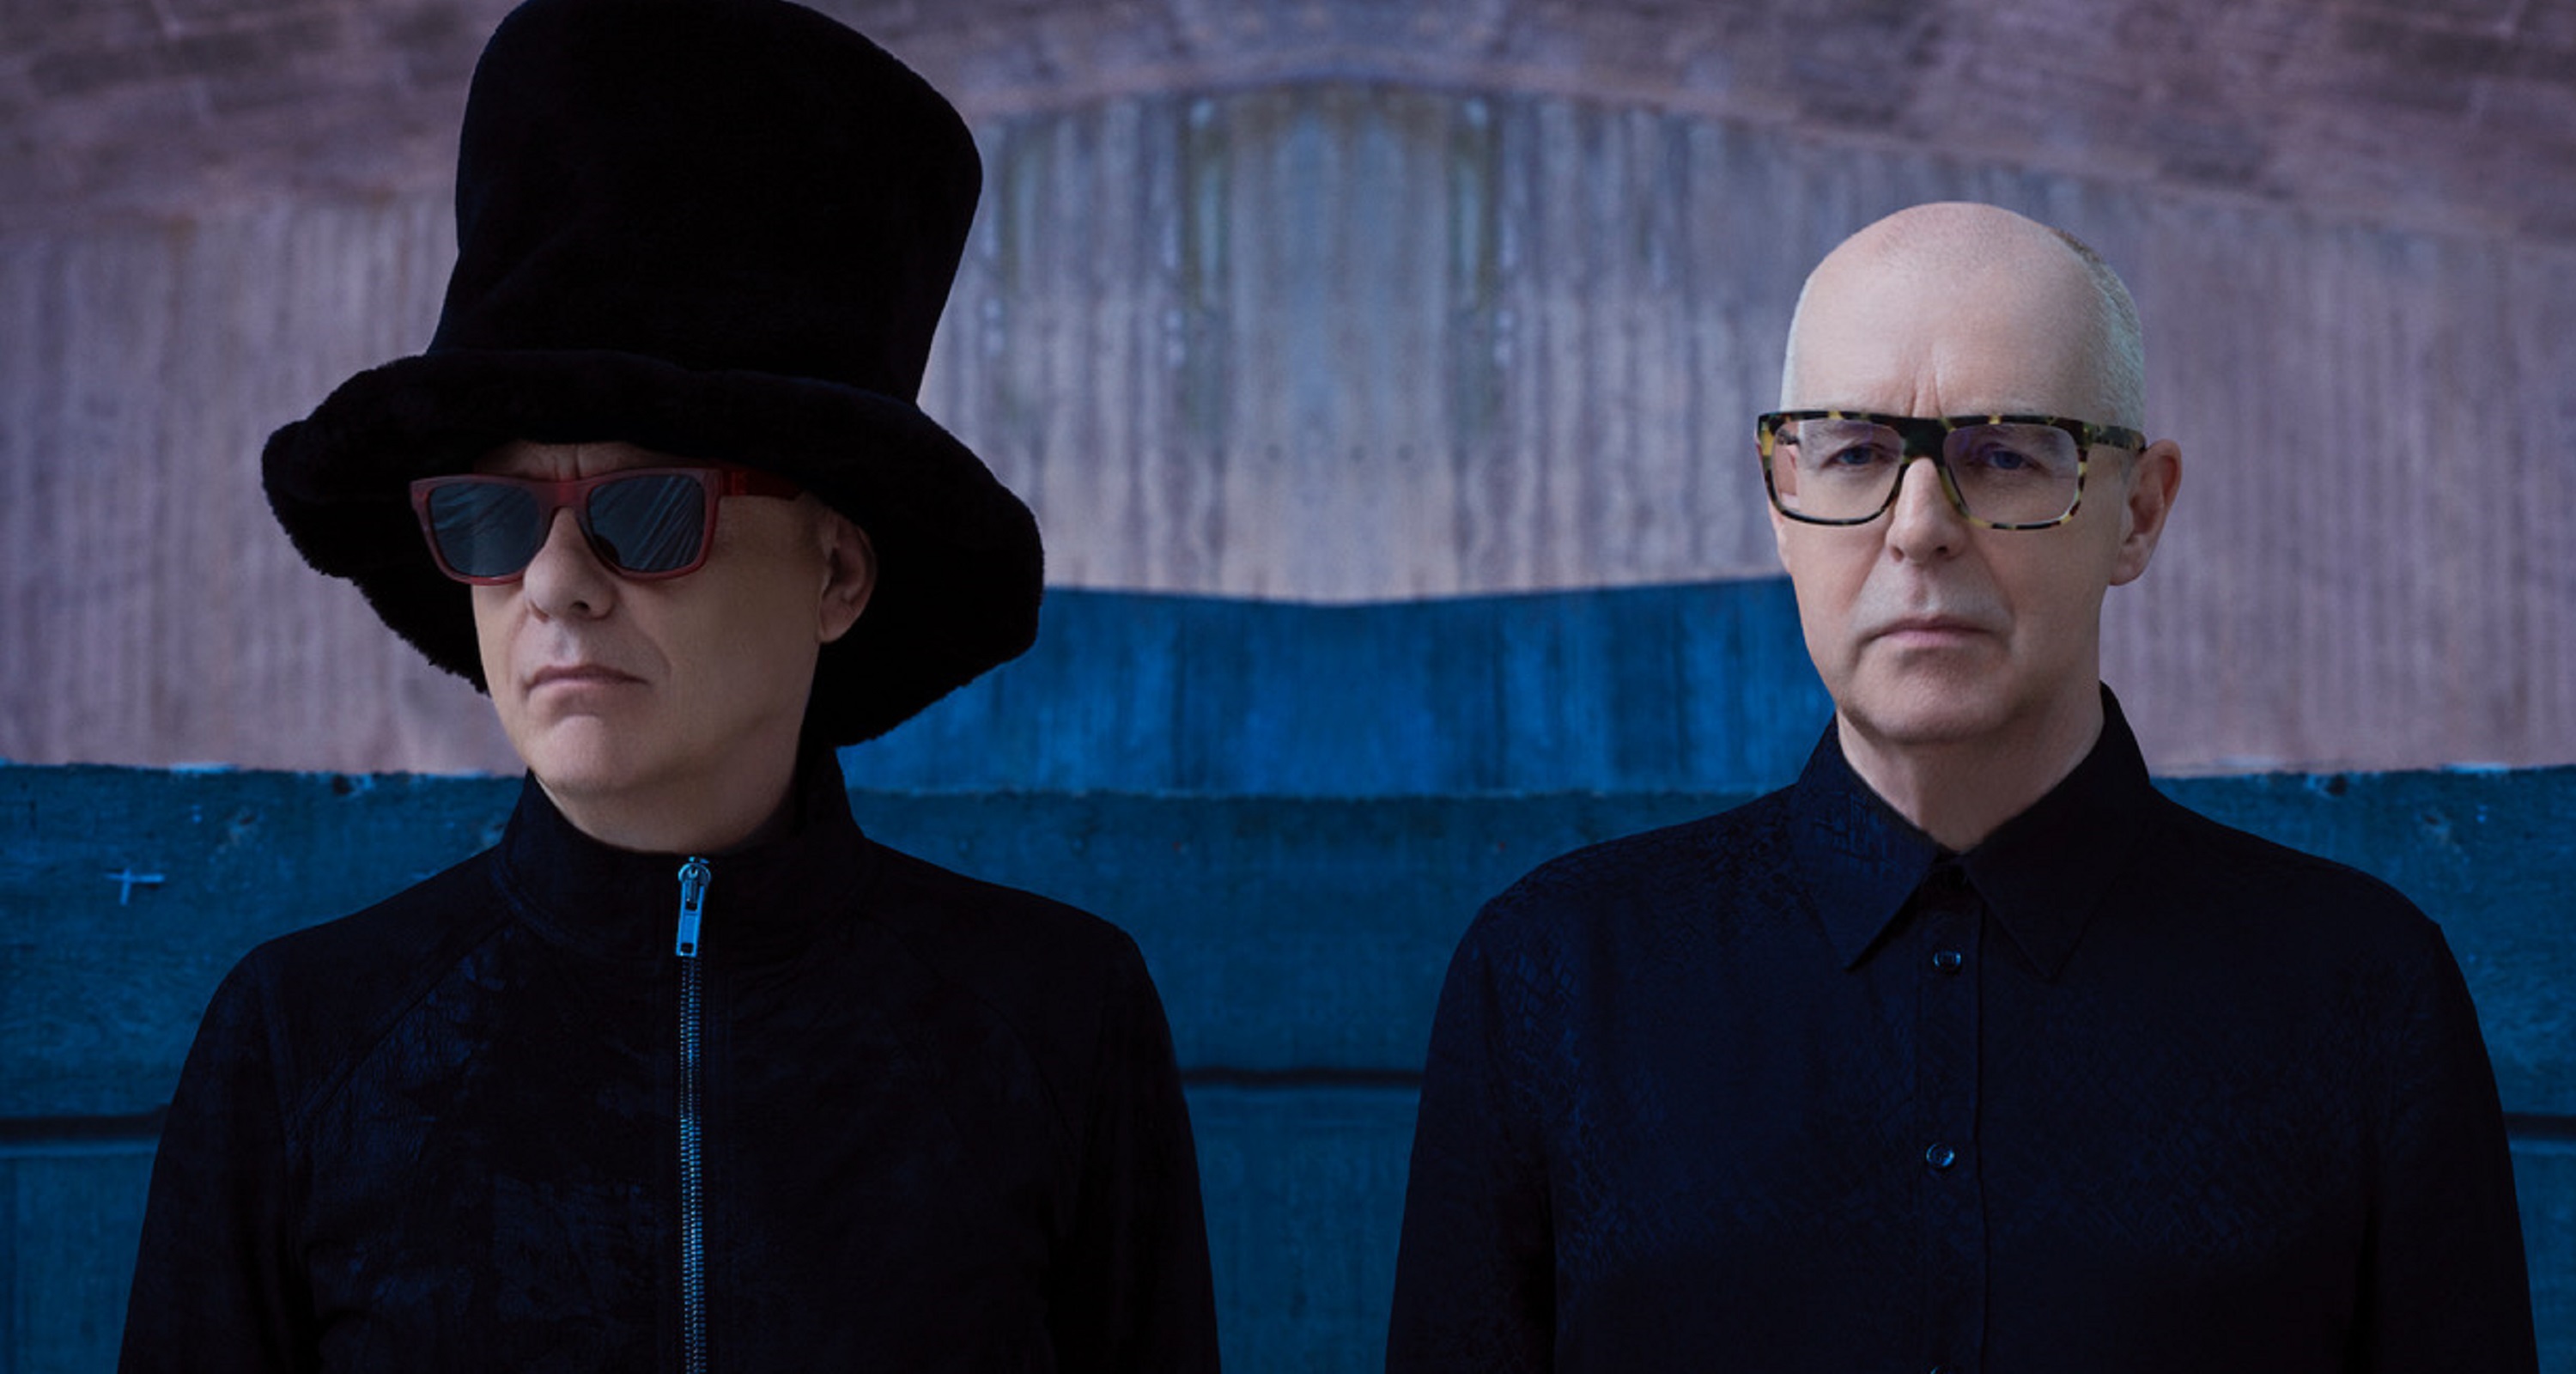 The Pet Shop Boys Dreamworld Greatest Hits Tour 2022